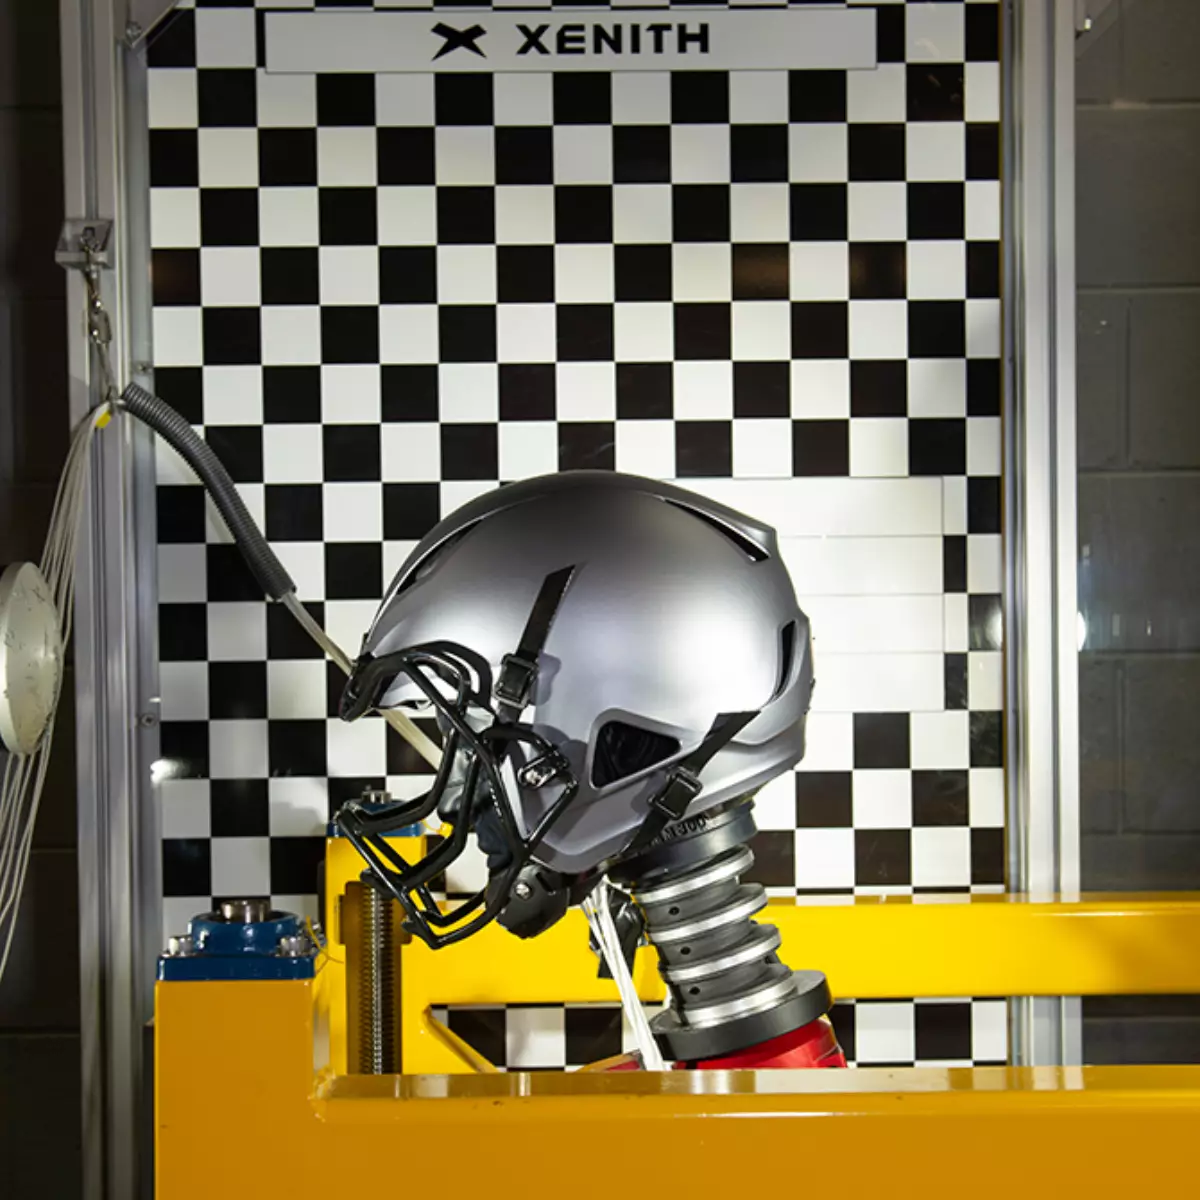 A pneumatic RAM testing of a Xenith football helmet.